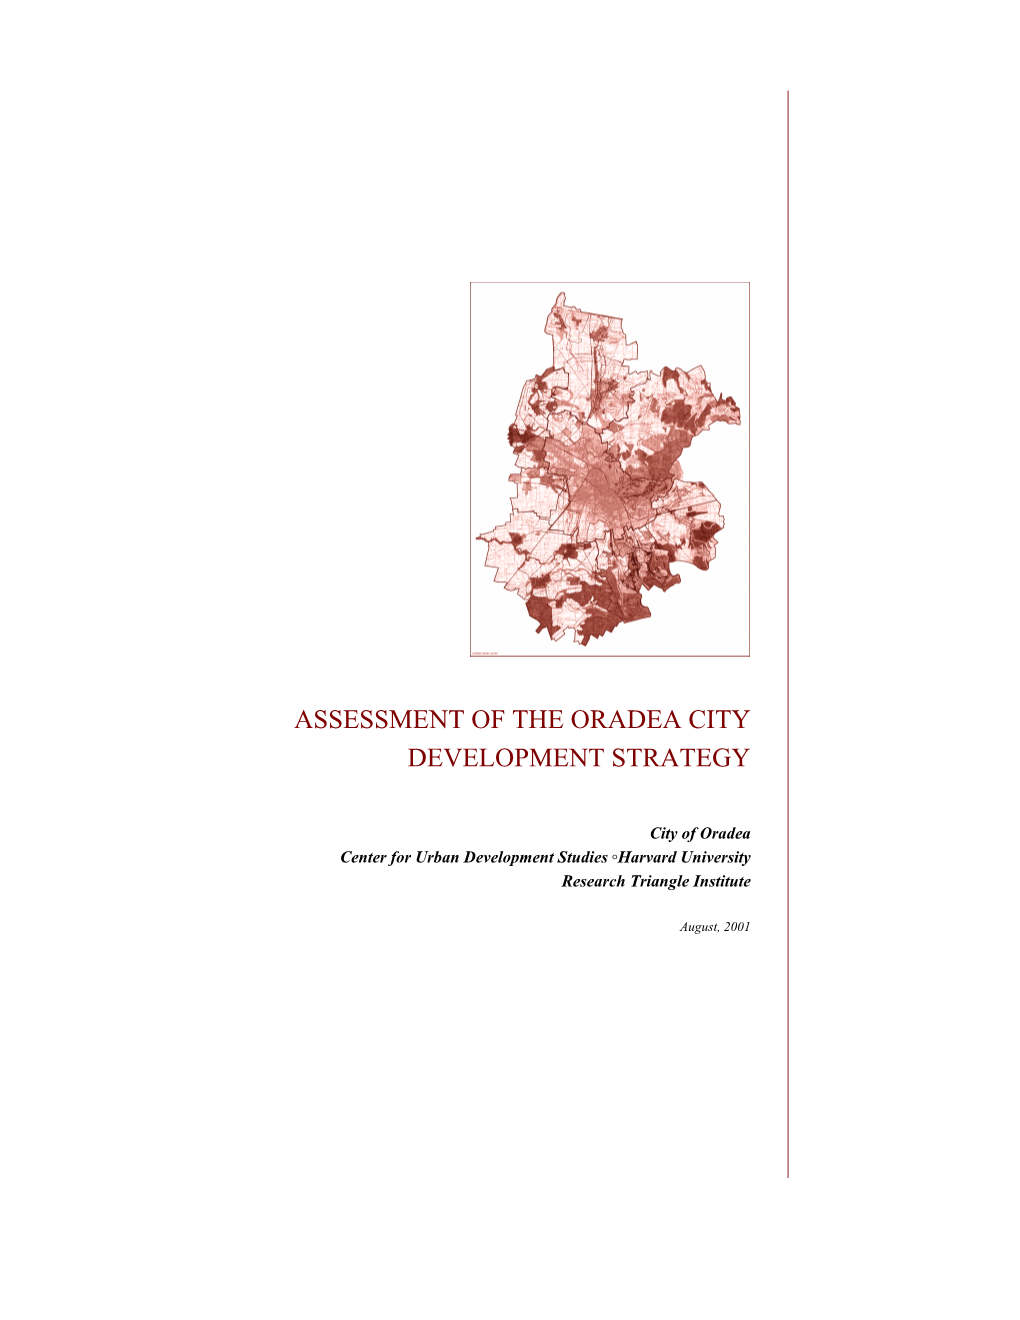 Assessment of the Oradea City Development Strategy